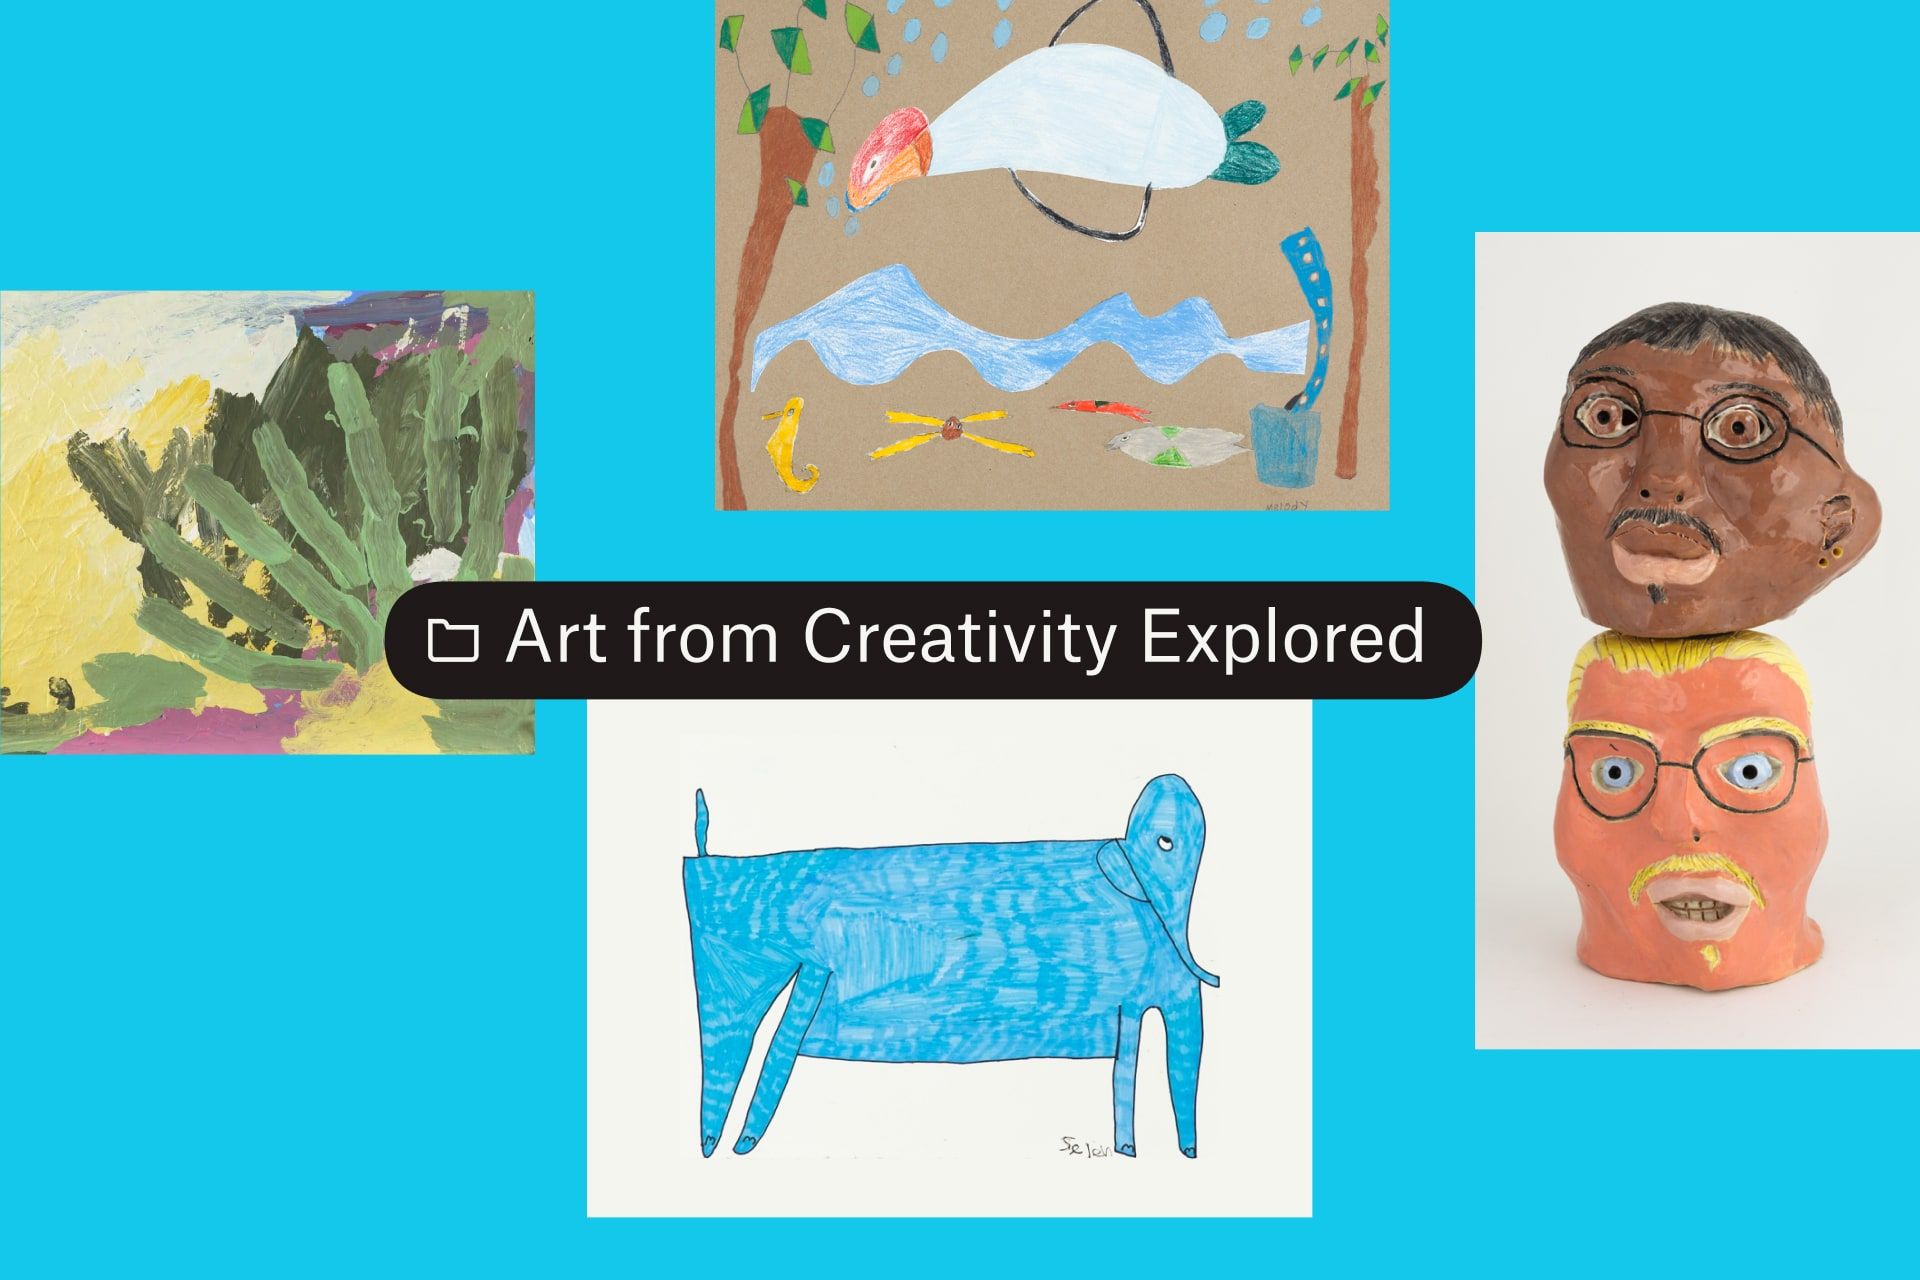 Dossier intitulé “Art from Creativity Explored”, avec quatre illustrations